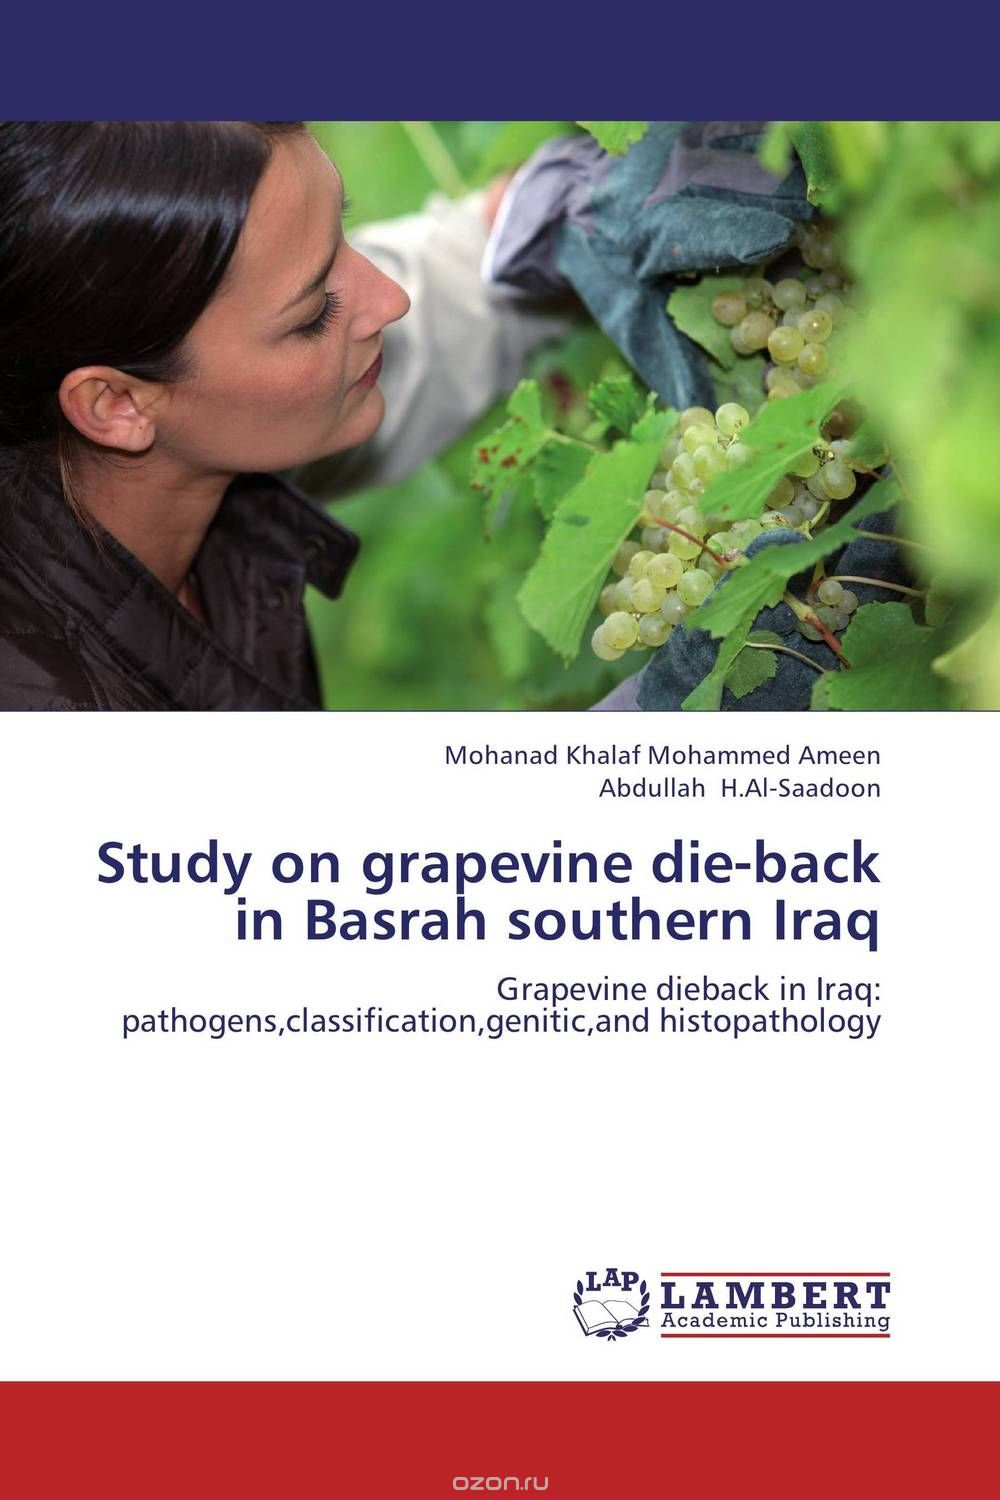 Скачать книгу "Study on grapevine die-back in Basrah southern Iraq"